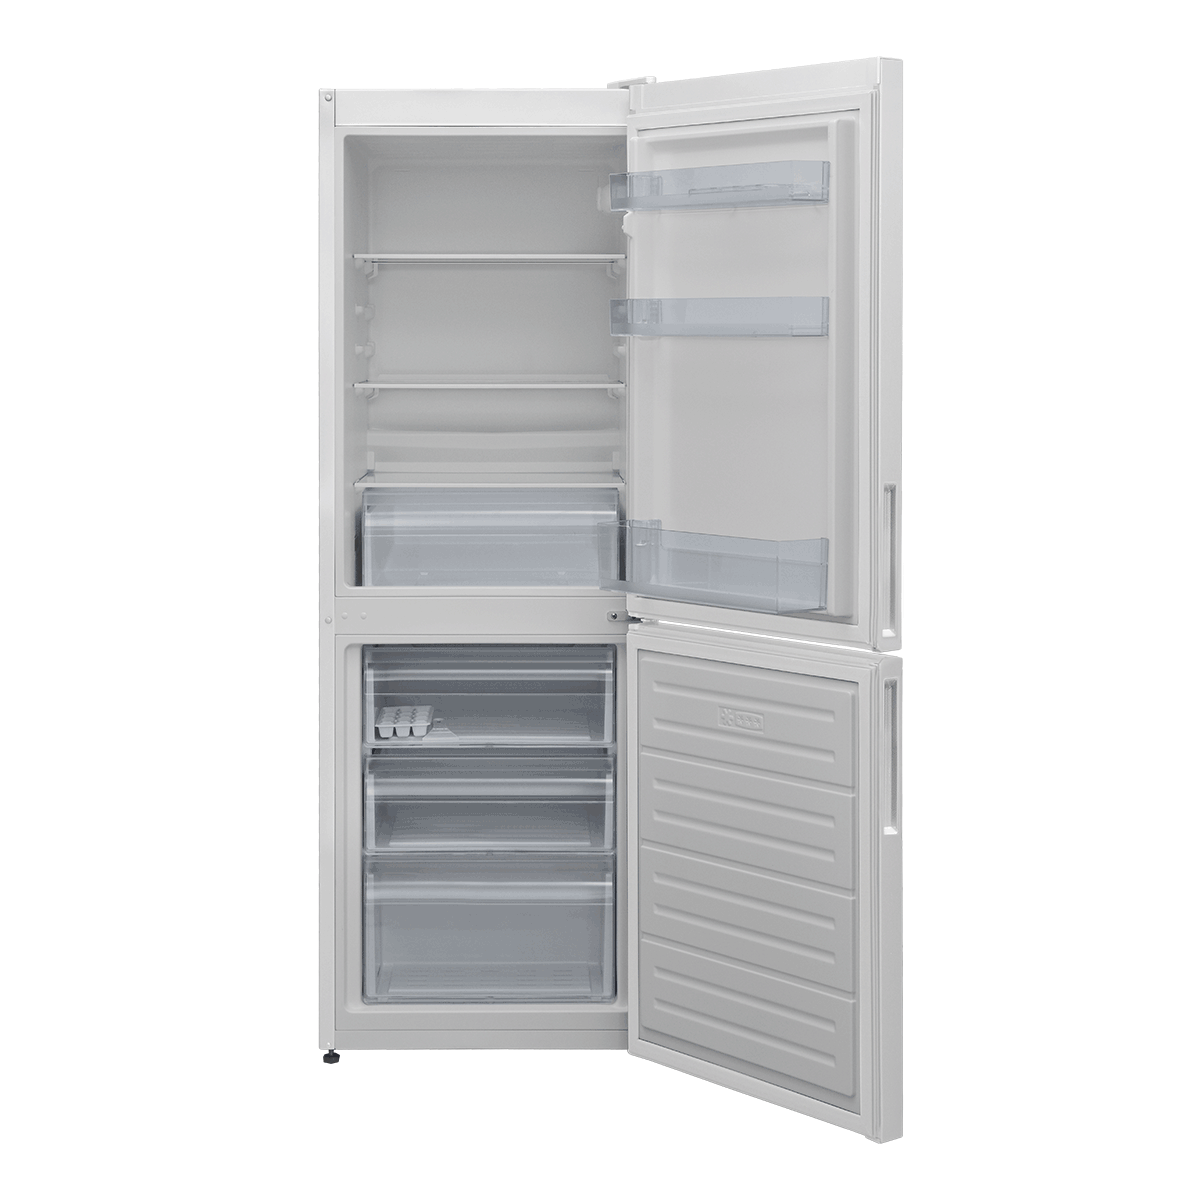 Combined refrigerator KK 2520 E 